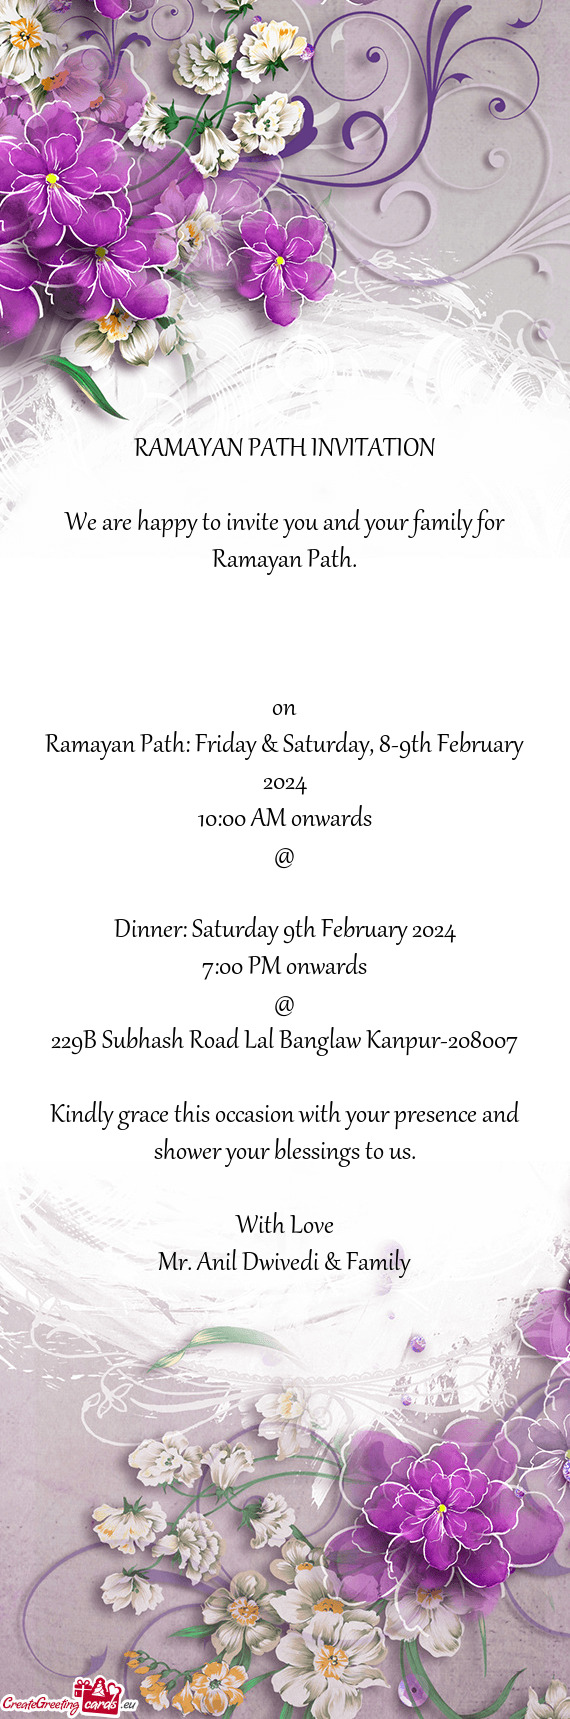 Ramayan Path: Friday & Saturday, 8-9th February 2024